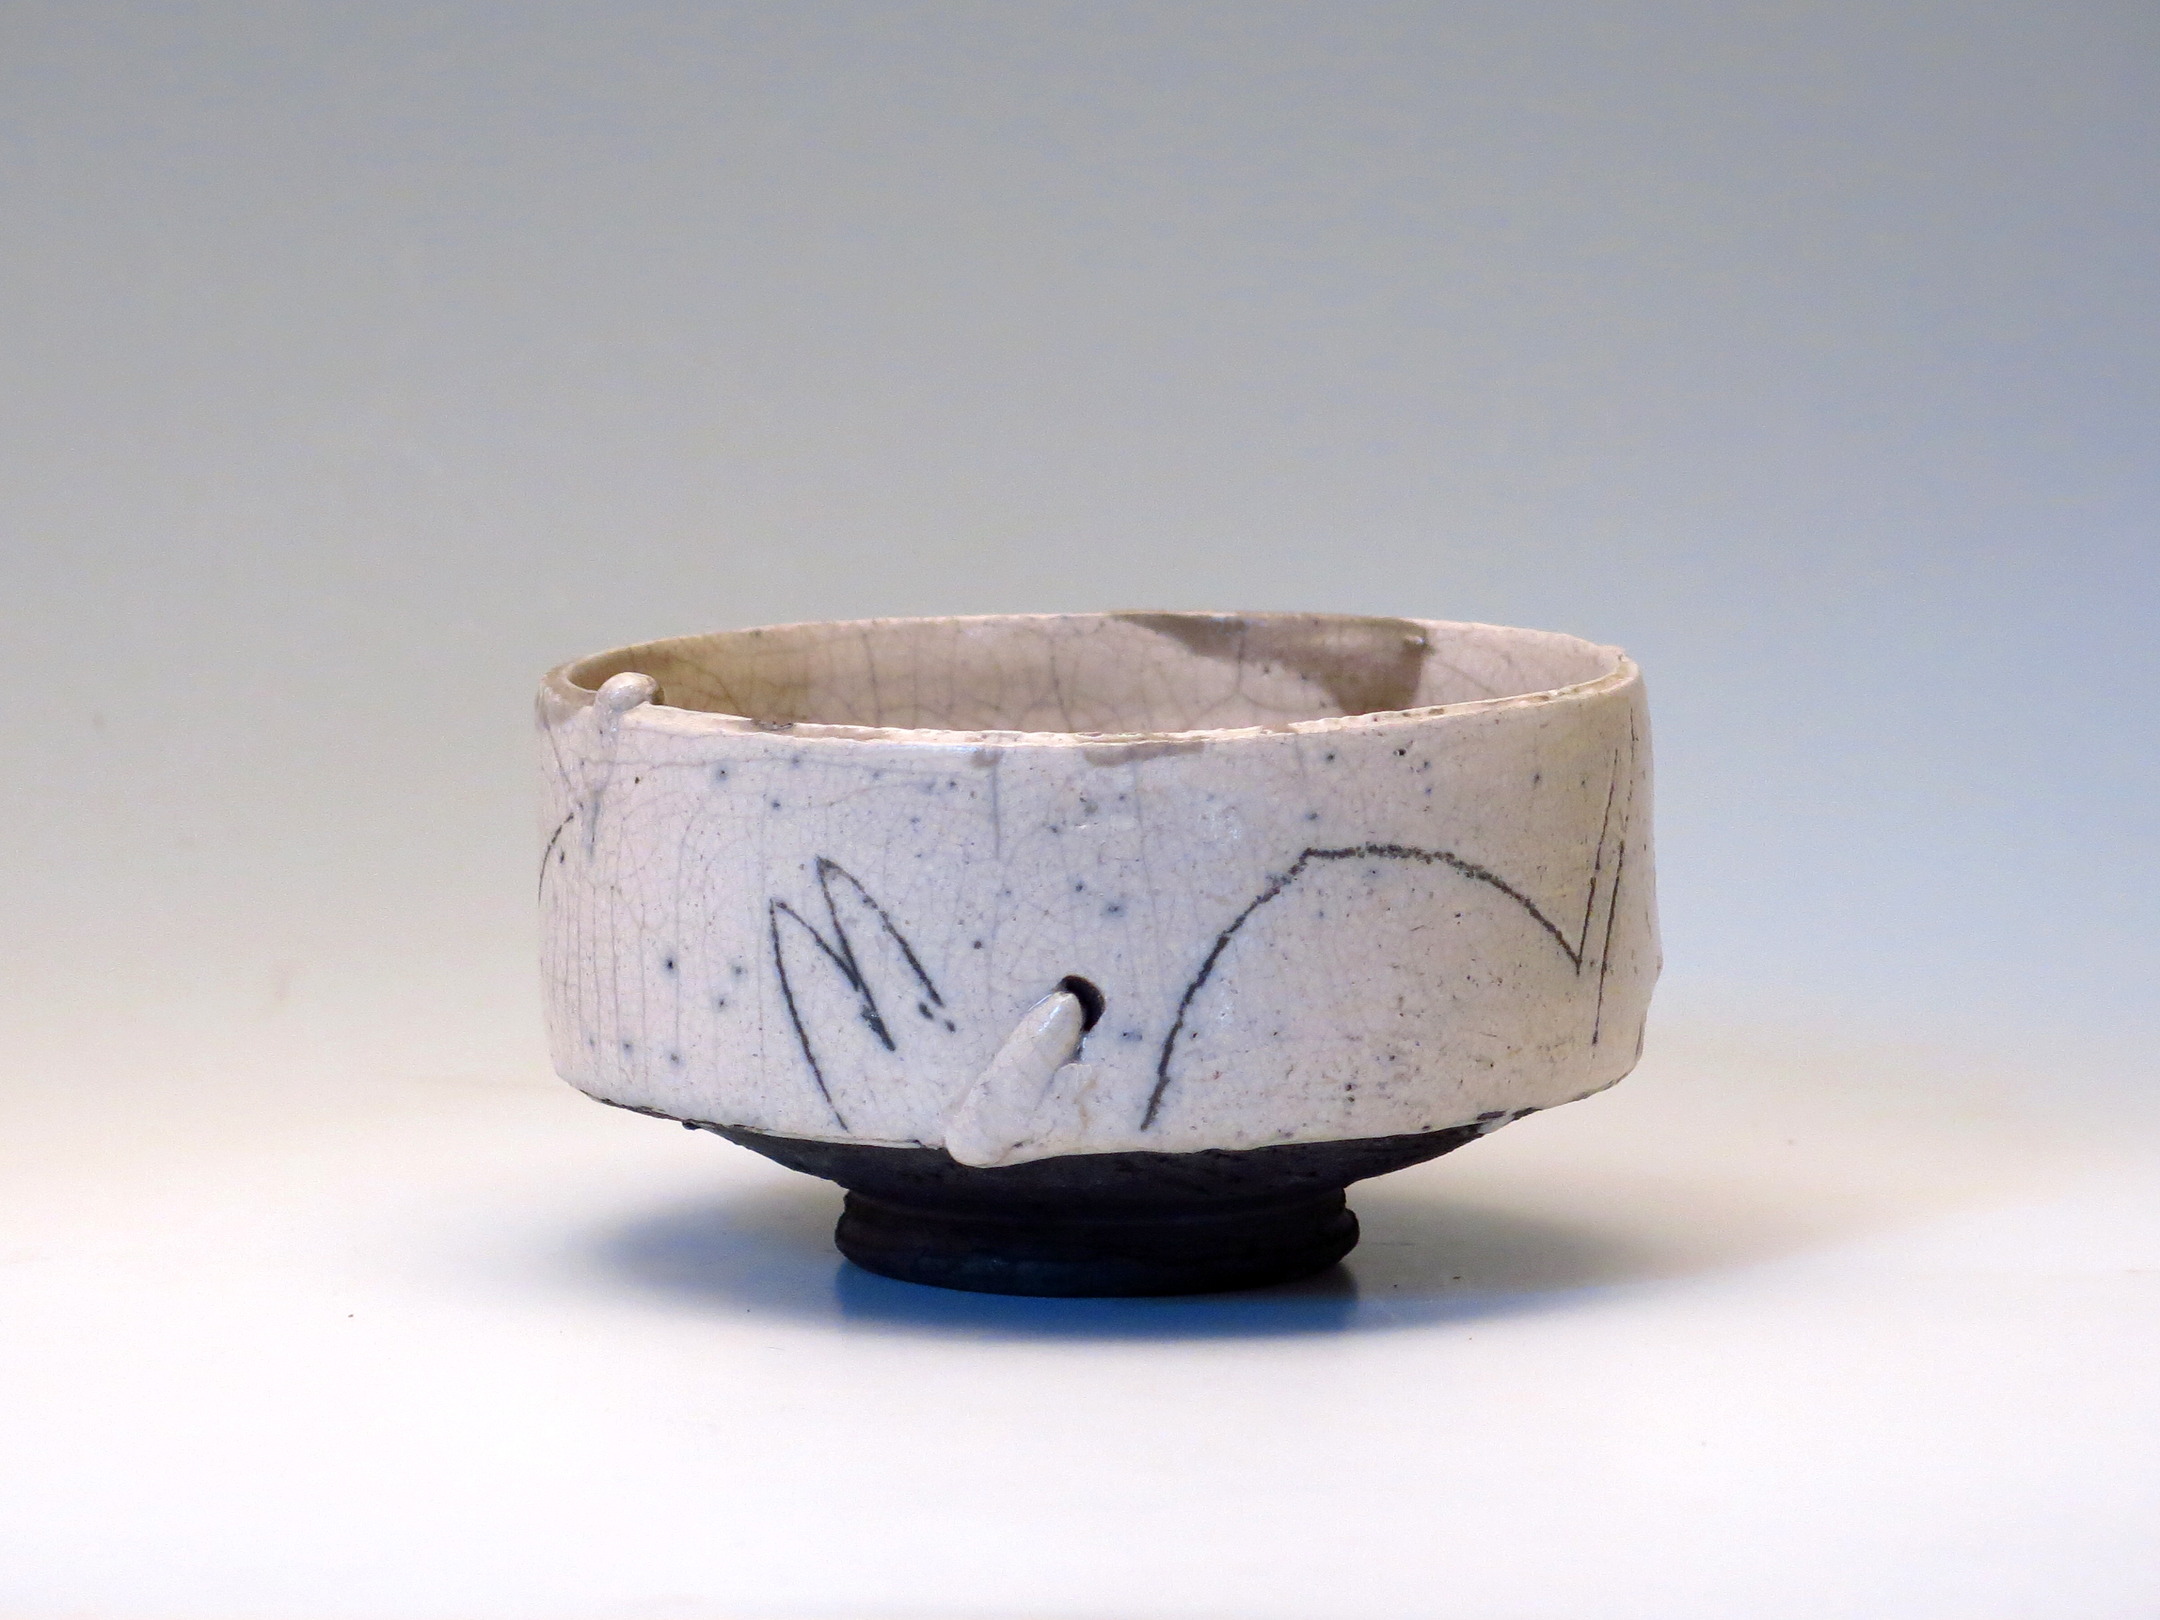 Bill Farrell, Tea Bowl, 2020, Raku-fired stoneware, 3 x 6.5 x 6.5 inches, Courtesy of the artist's estate